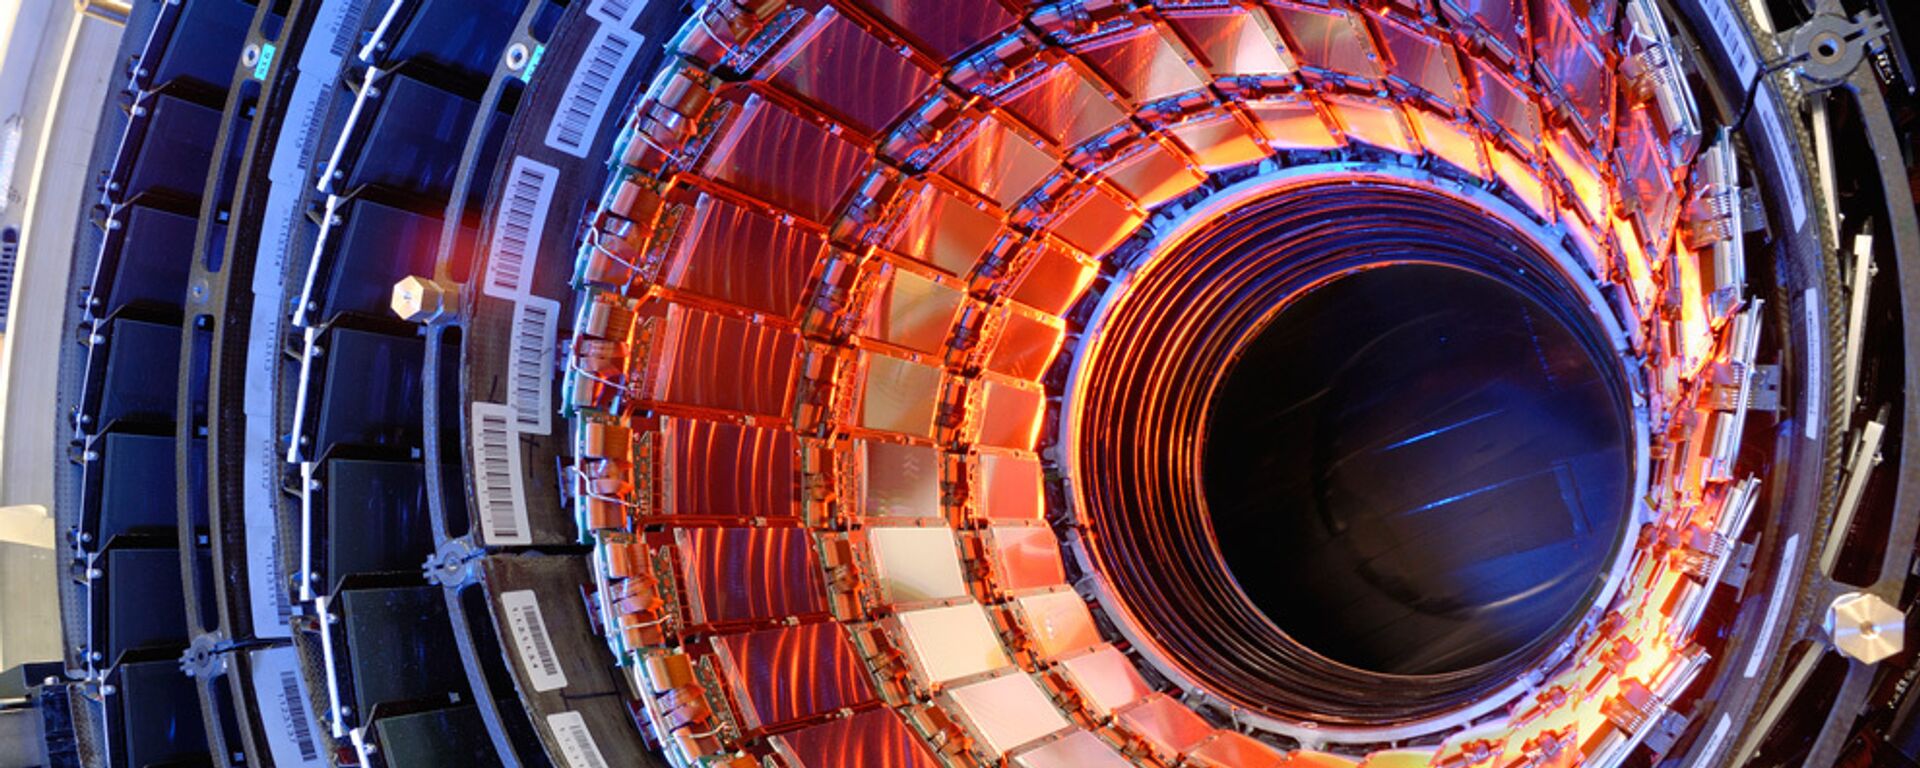 Large Hadron Collider - Sputnik International, 1920, 19.11.2020